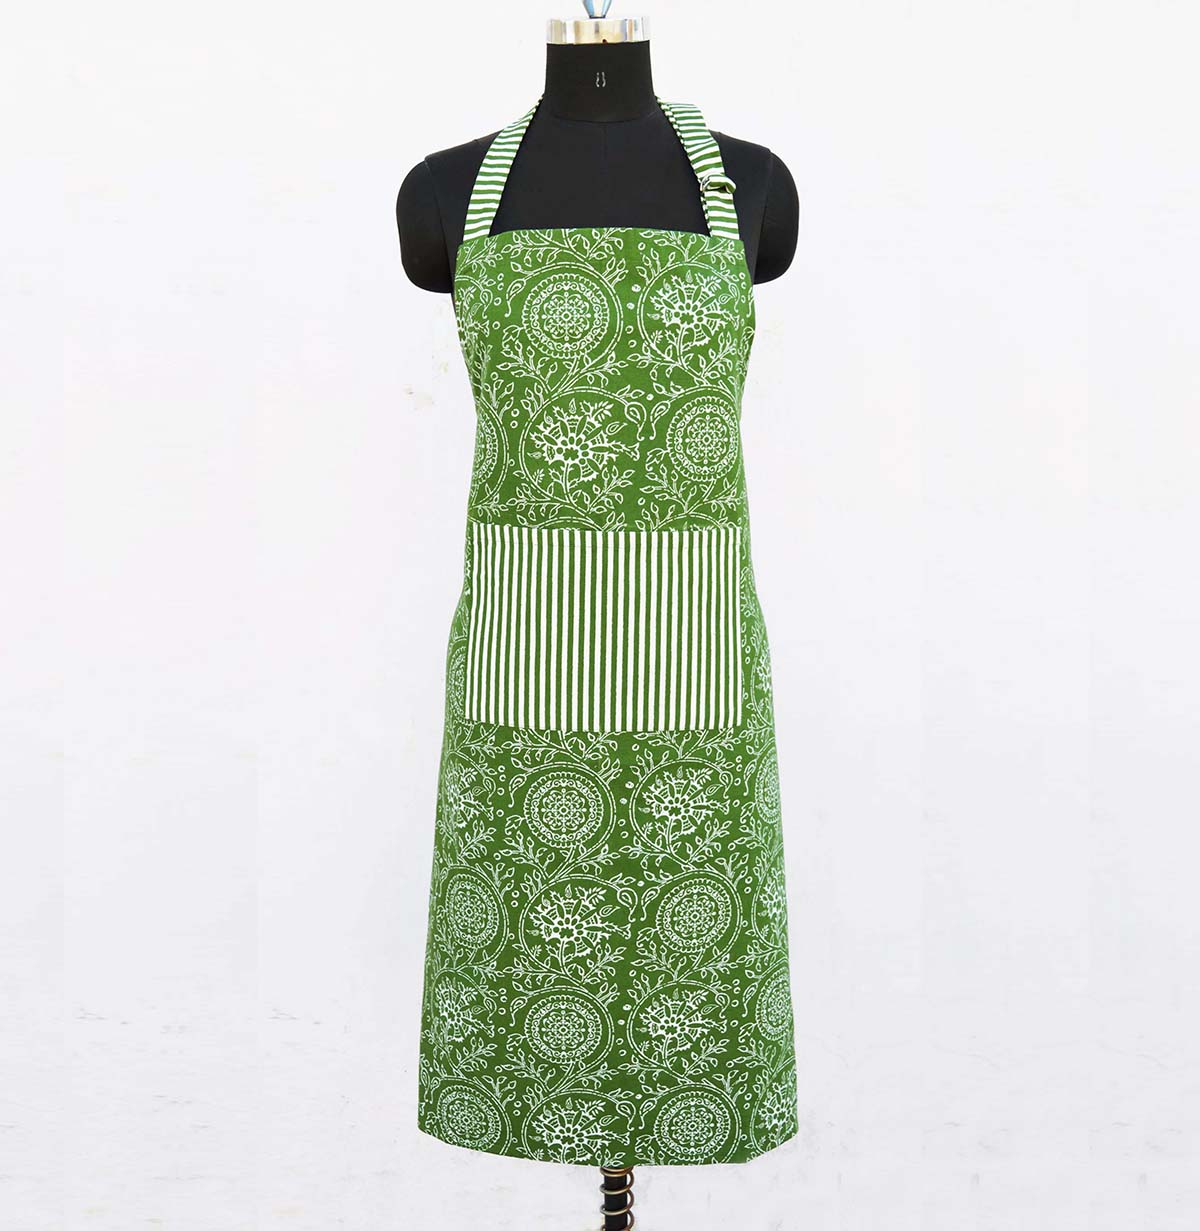 Green apron, kalamkari print, kitchen accessory, size 27X 35 inches